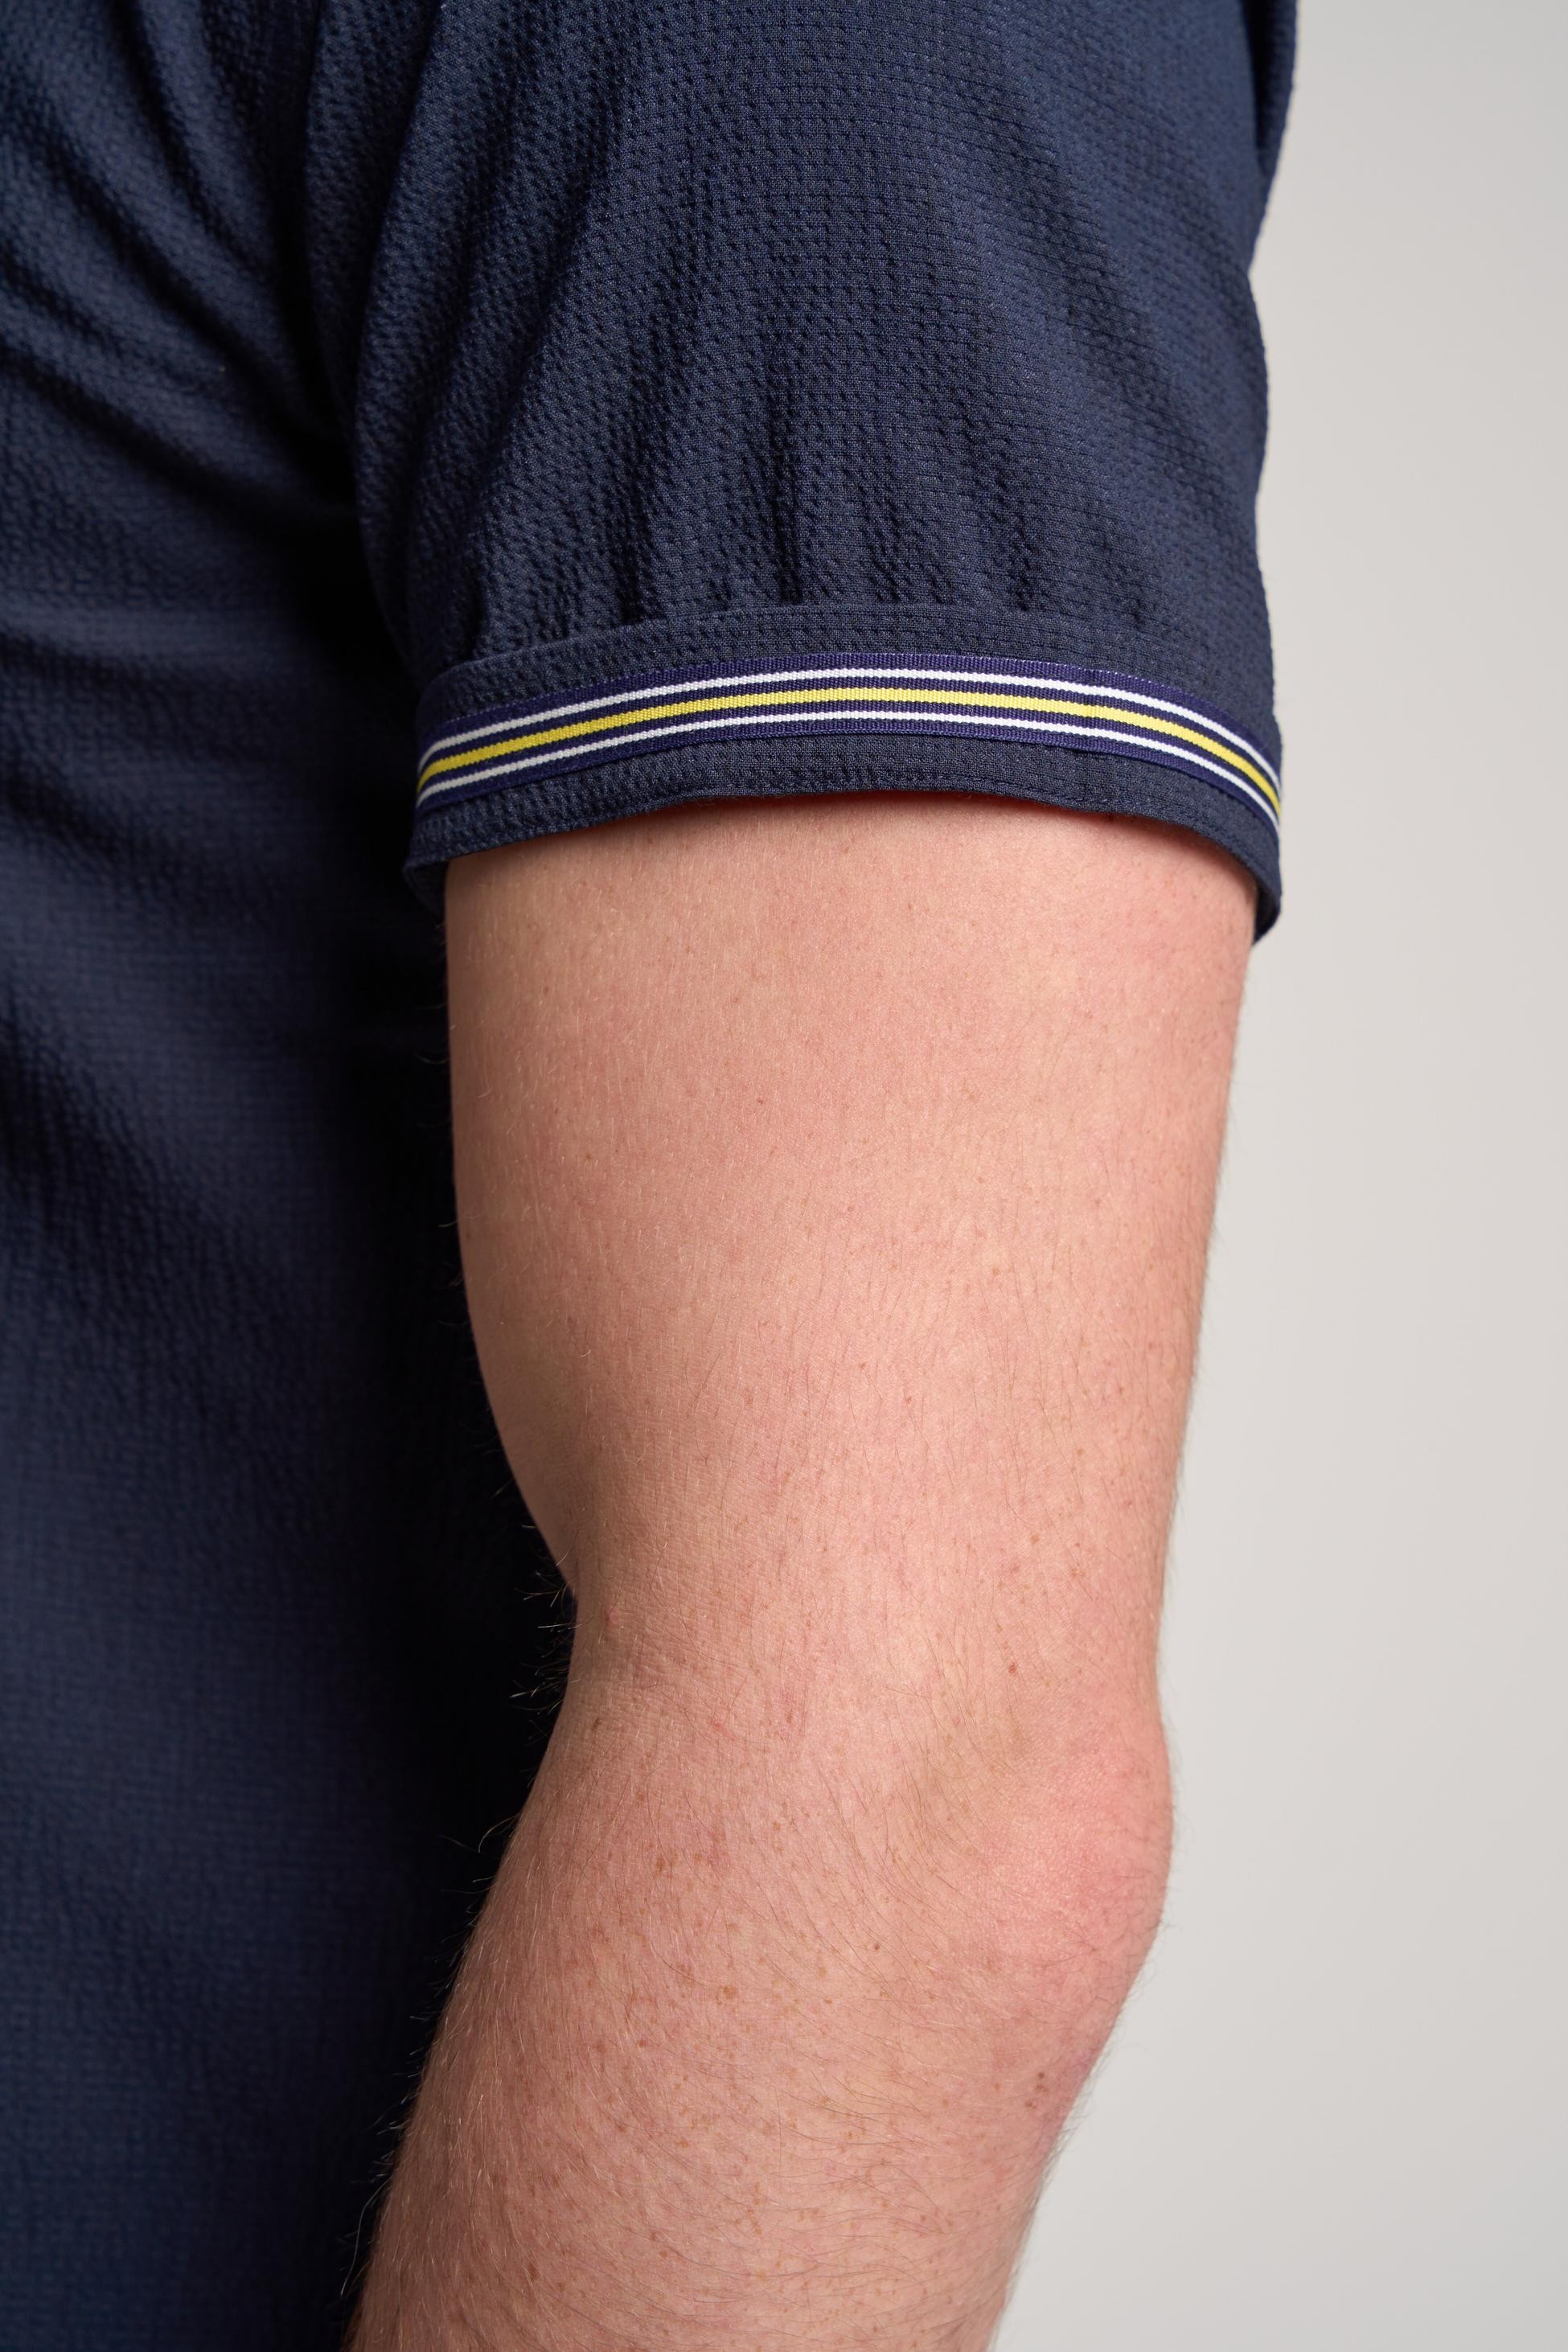 Heren Katoenen Textuur Slim Fit Overhemd – KAI - Navy blau